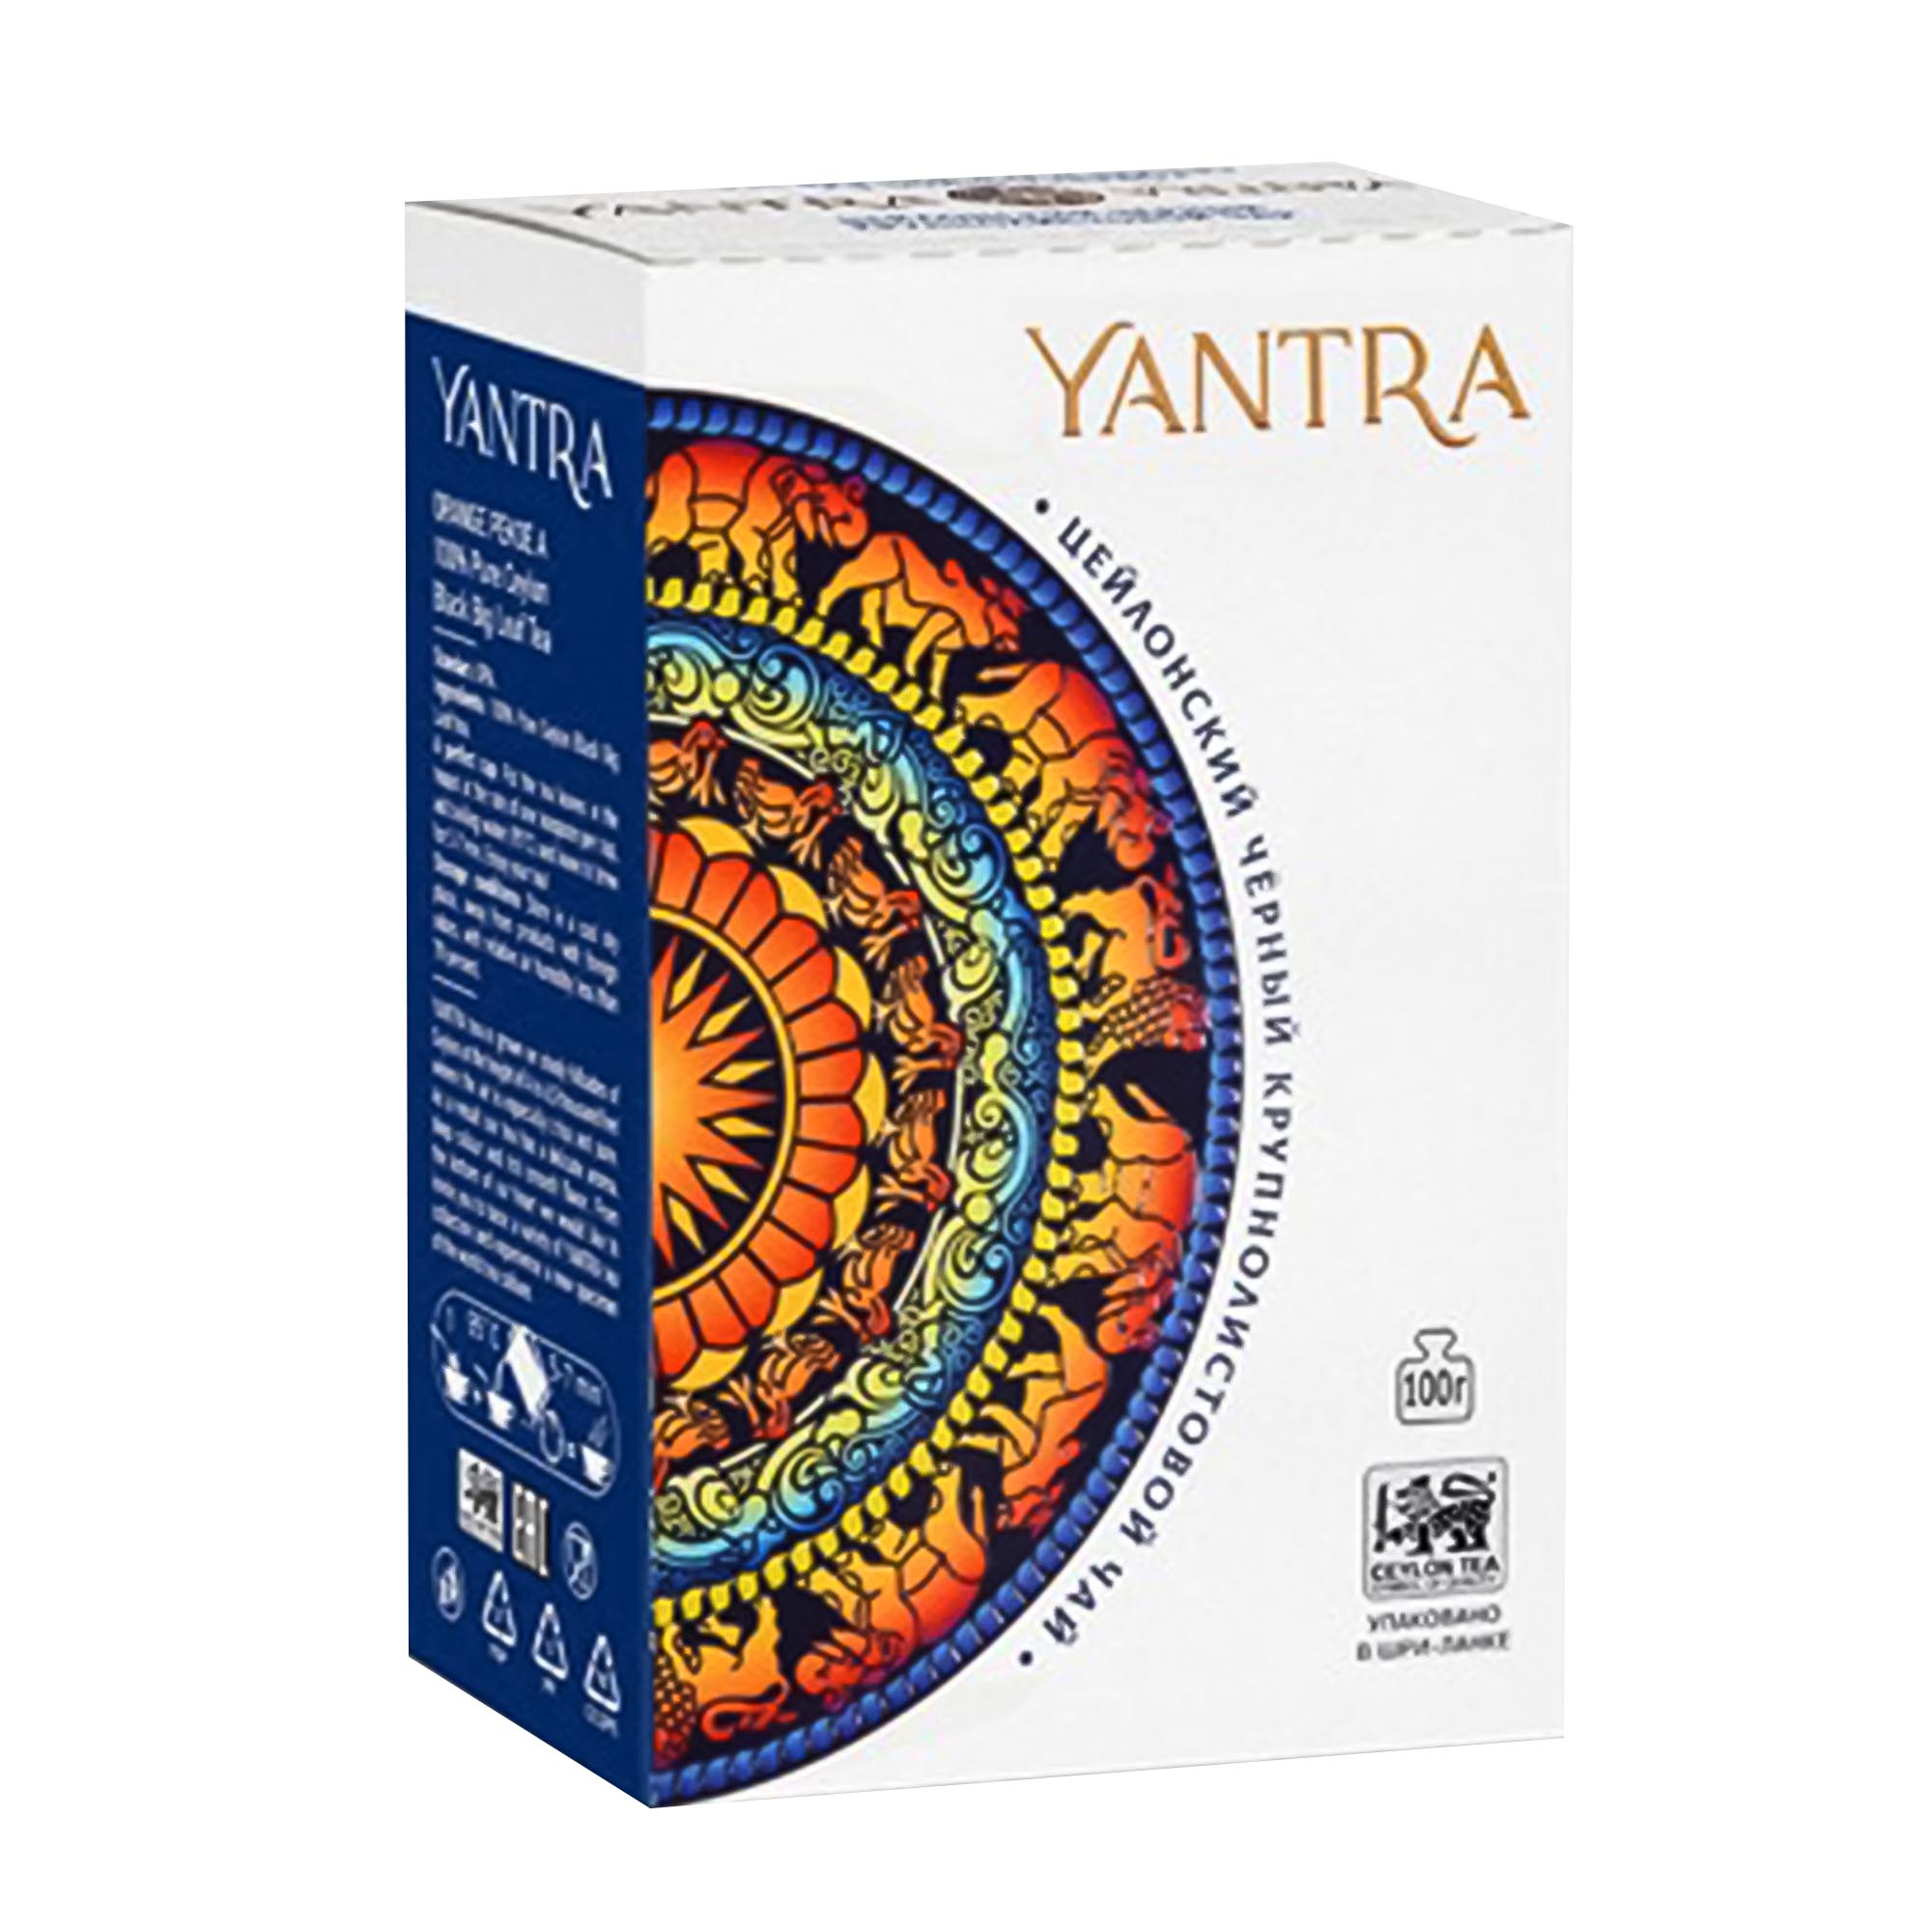 чай крупнолистовой yantra ора 200 г Чай черный крупнолистовой Yantra ОРА 500 г